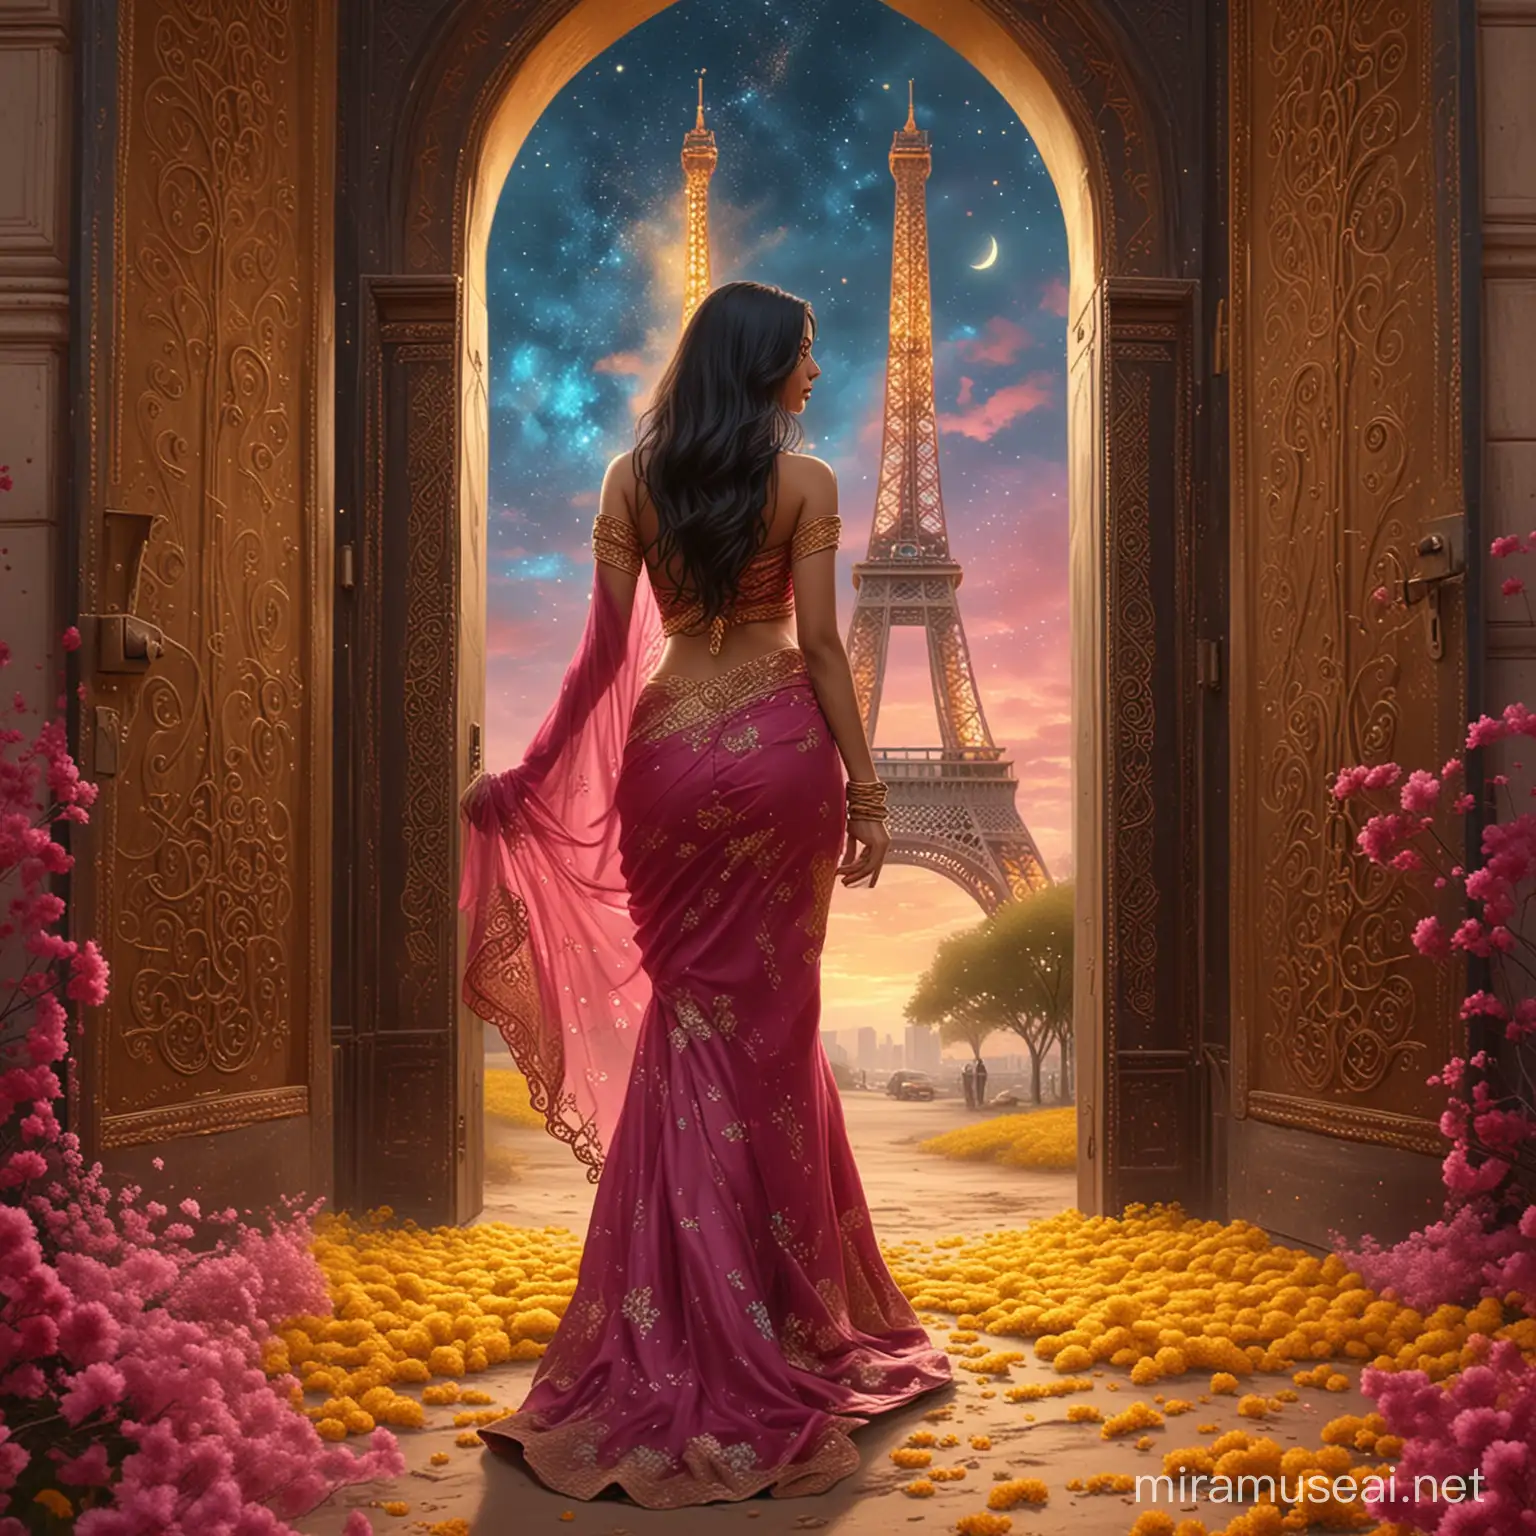 Elegant Woman Approaching Golden Arabian Door amid Dark Yellow Flowers and Pink Dust